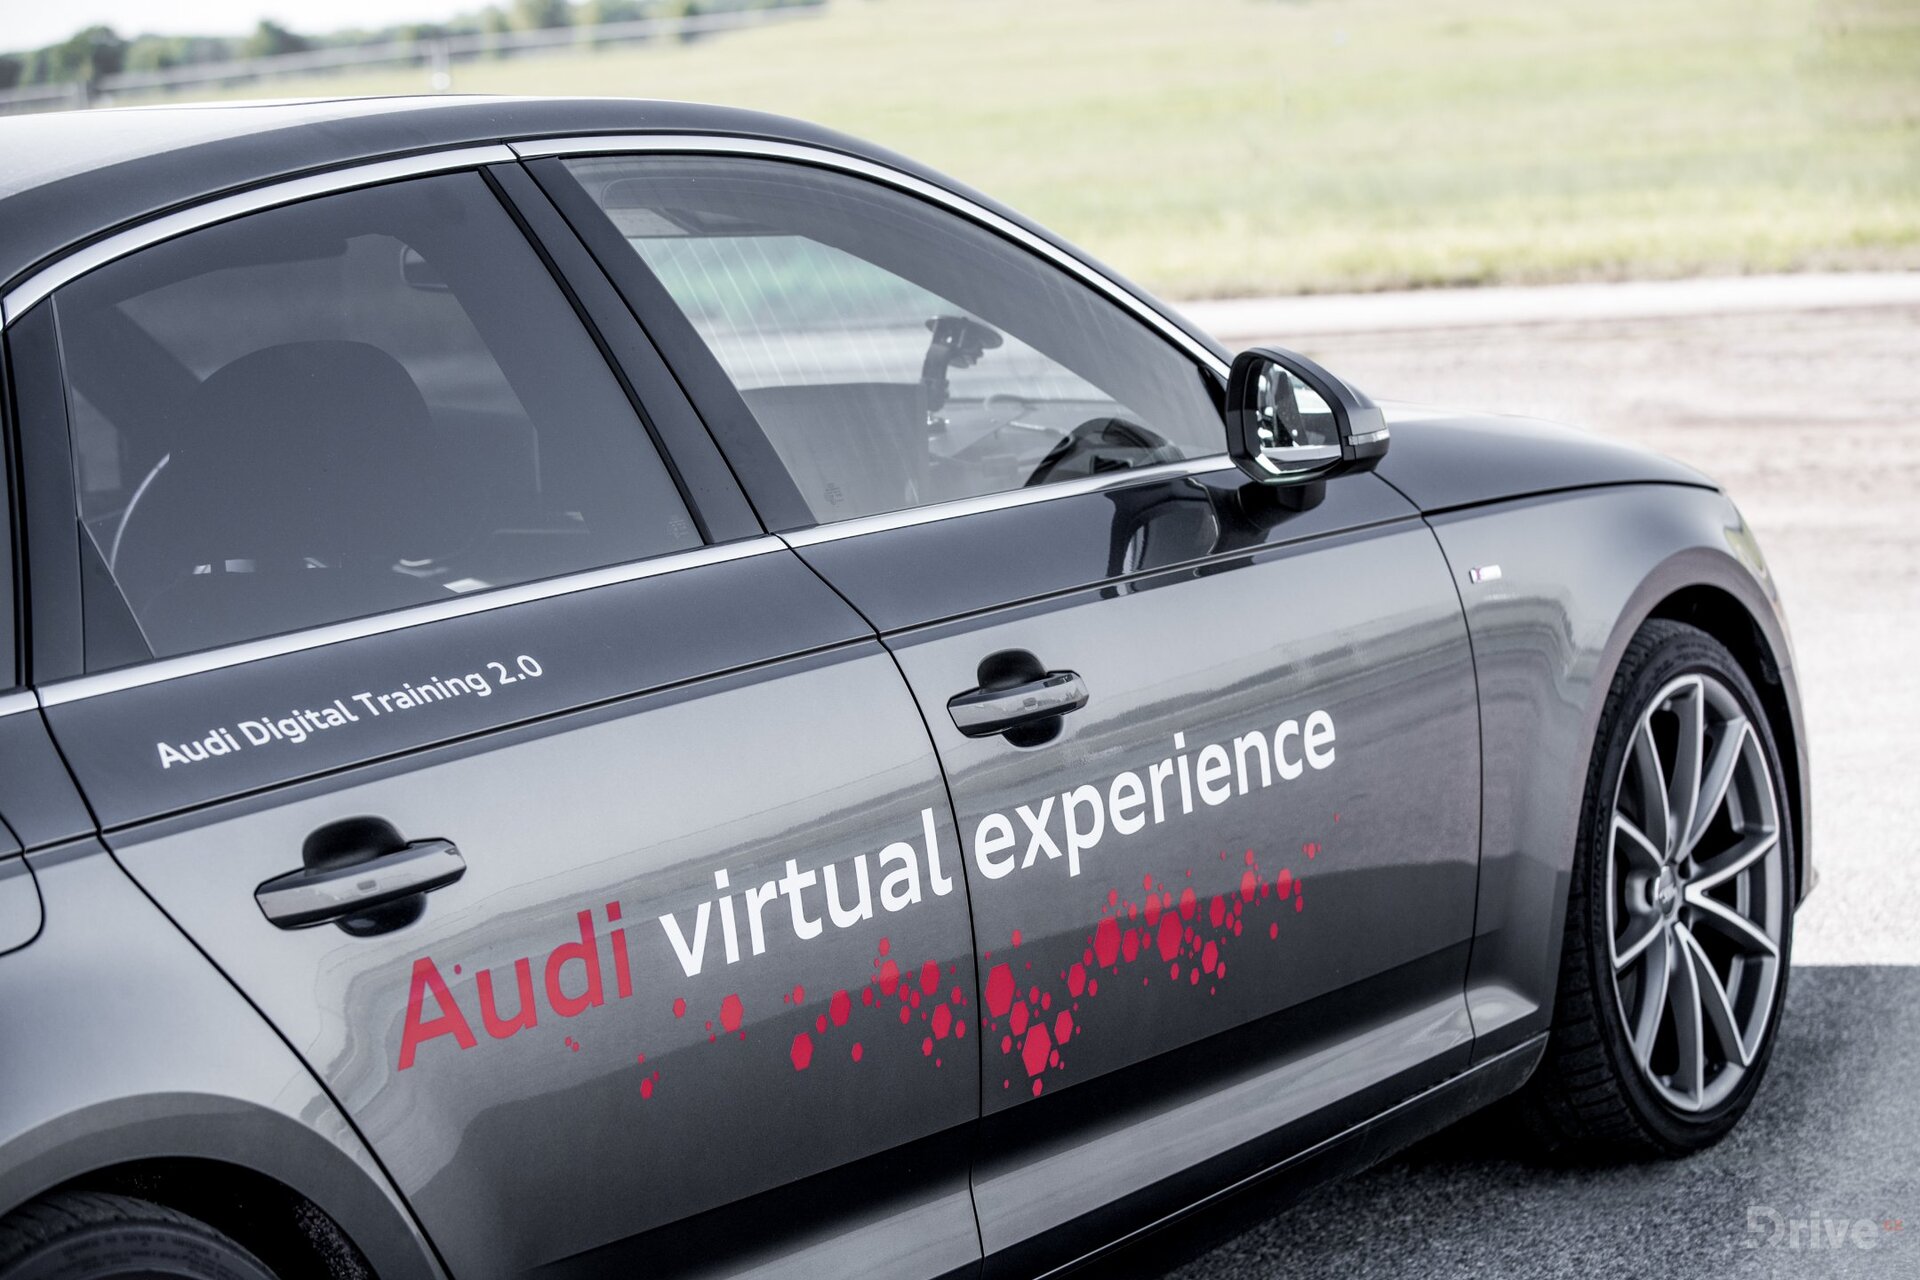 Audi Virtual Experience